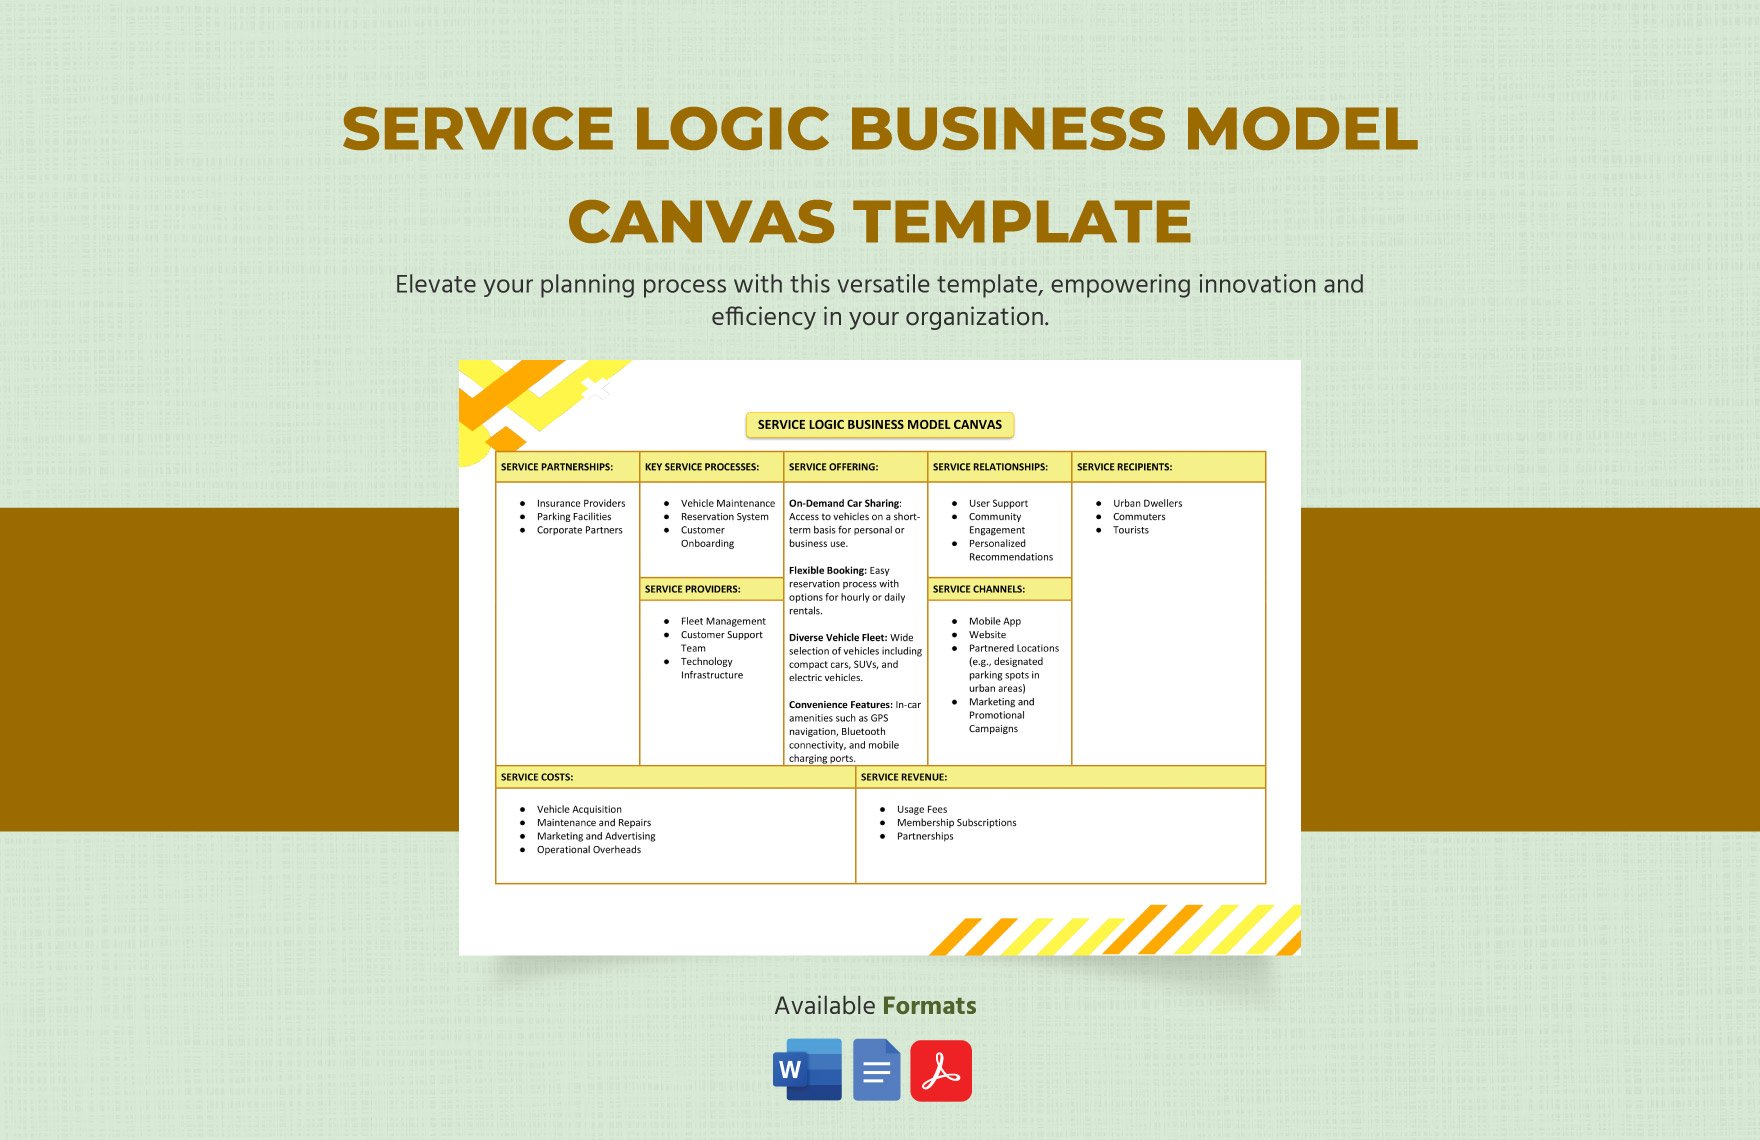 Service Logic Business Model Canvas Template